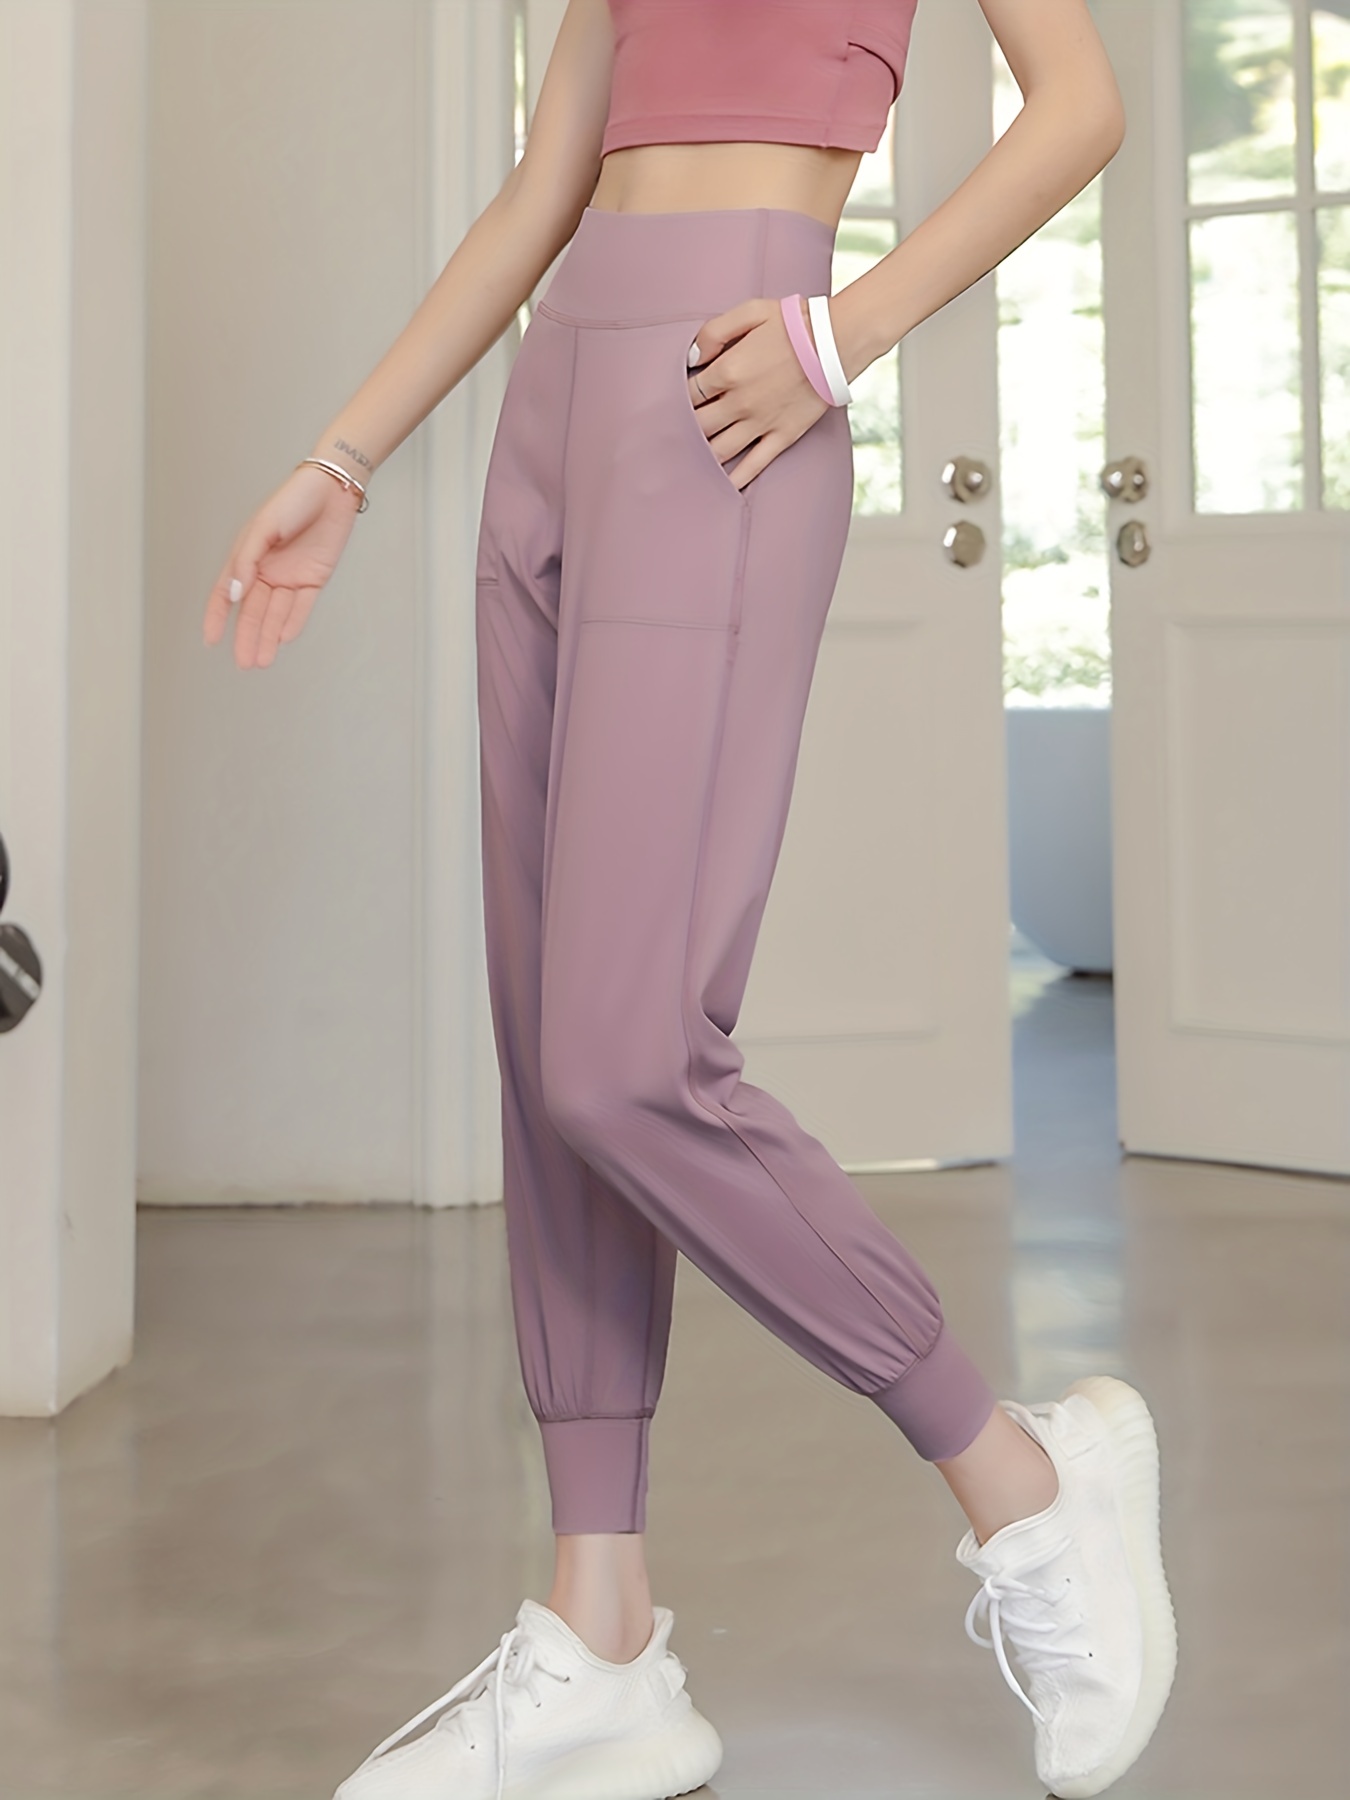 nsendm Unisex Pants Adult Yoga Pants for Women Tall with Pocket Sports Yoga  Shorts Pocket Fashion Women's Pants Fold over Yoga Pants for(Black, M)